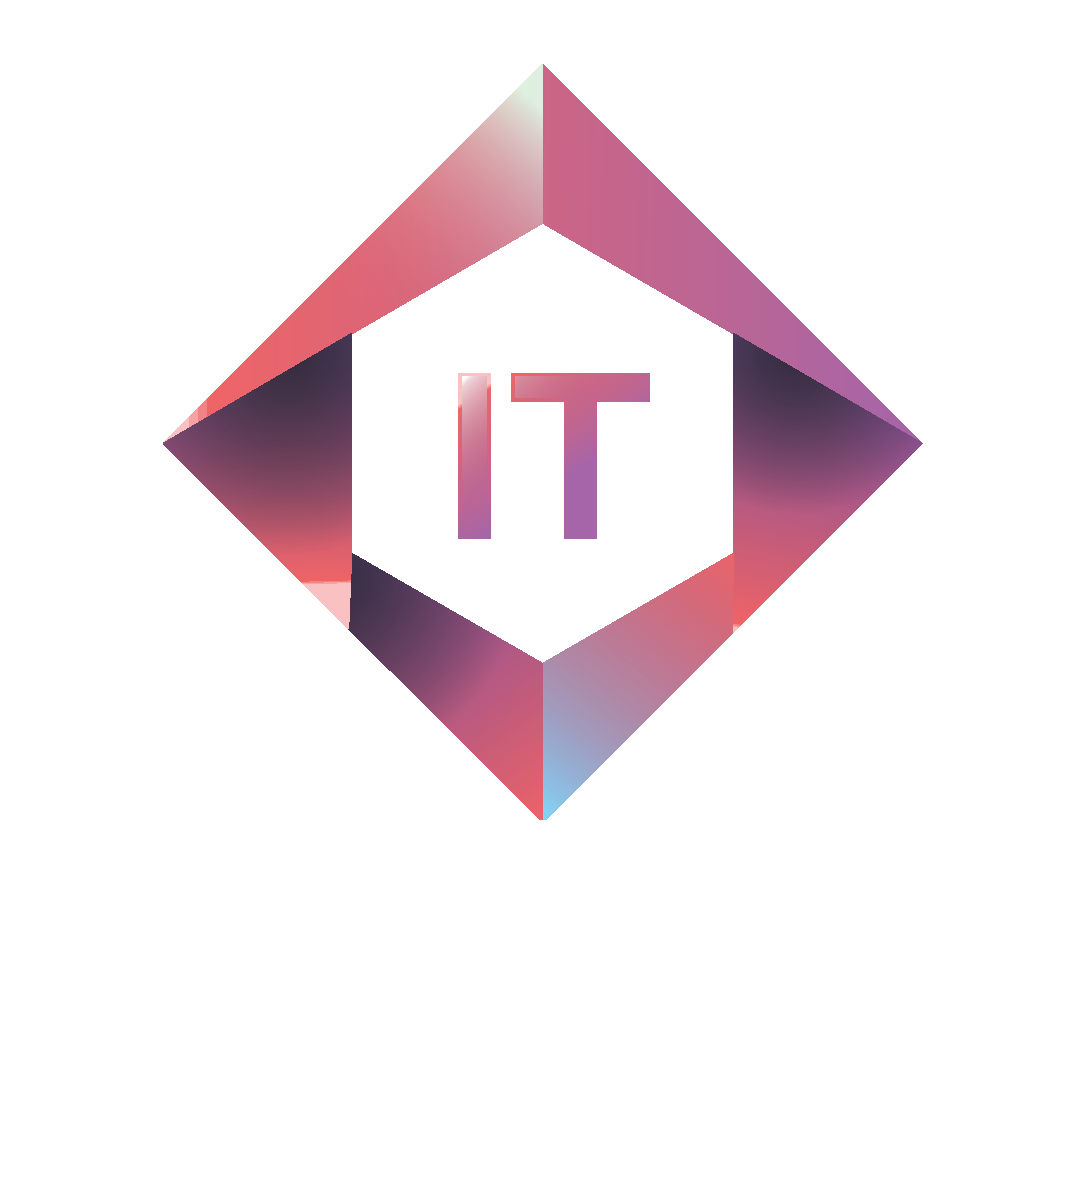 United Sadeem for Information Technology